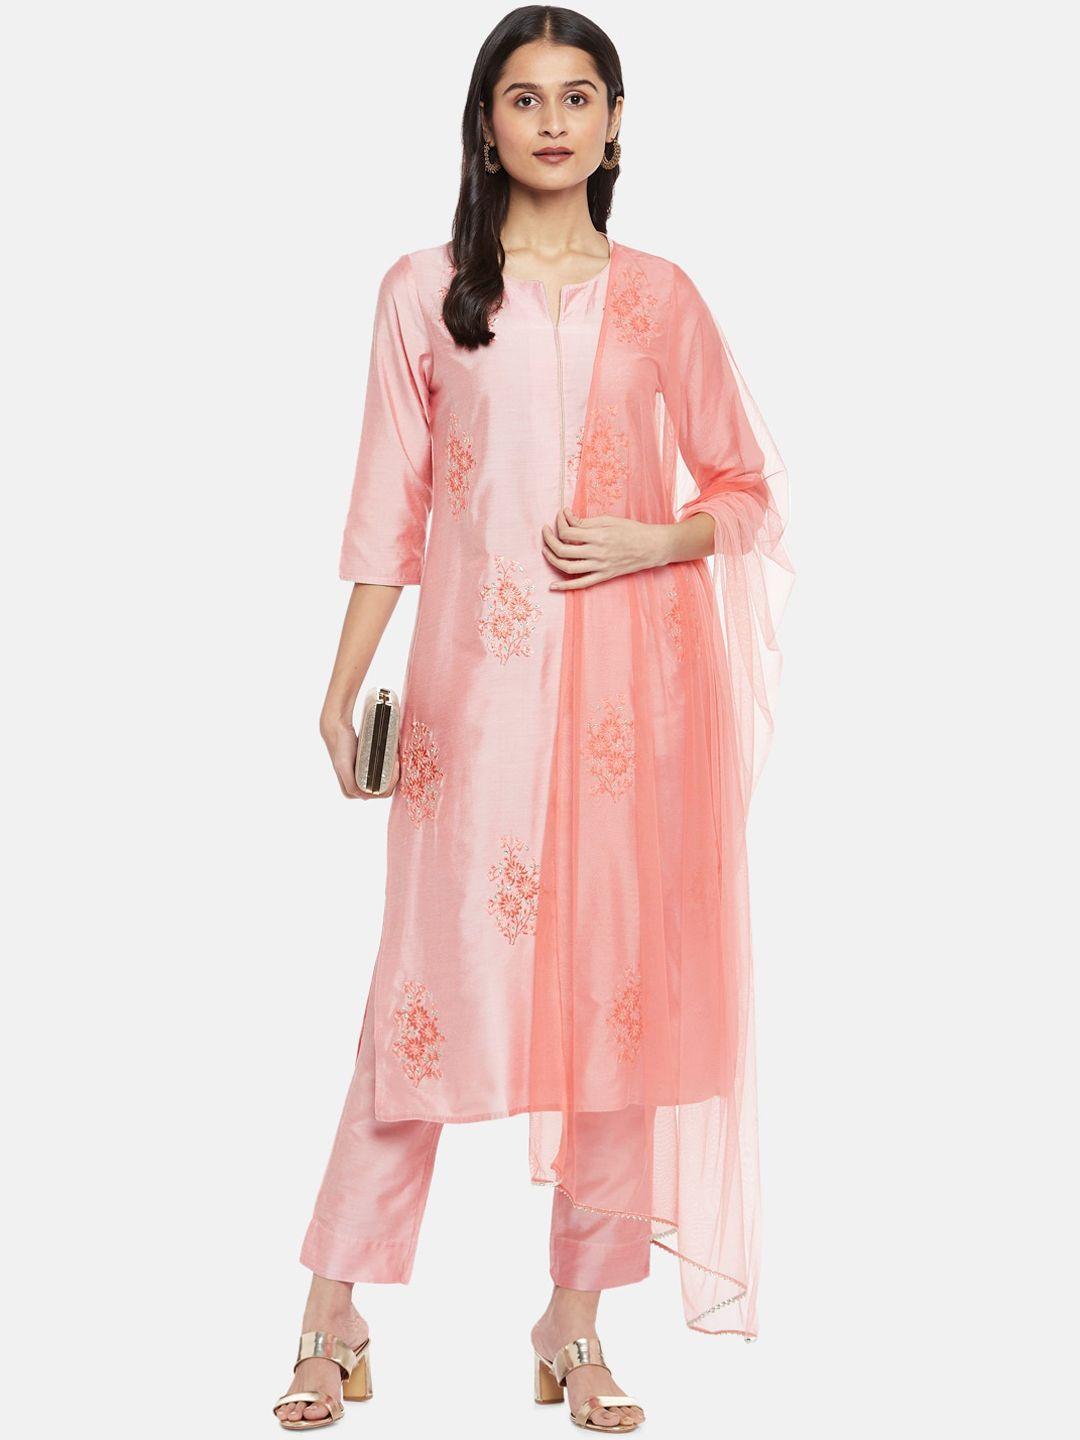 rangmanch-by-pantaloons-women-pink-floral-embroidered-regular-kurta-sets-with-dupatta